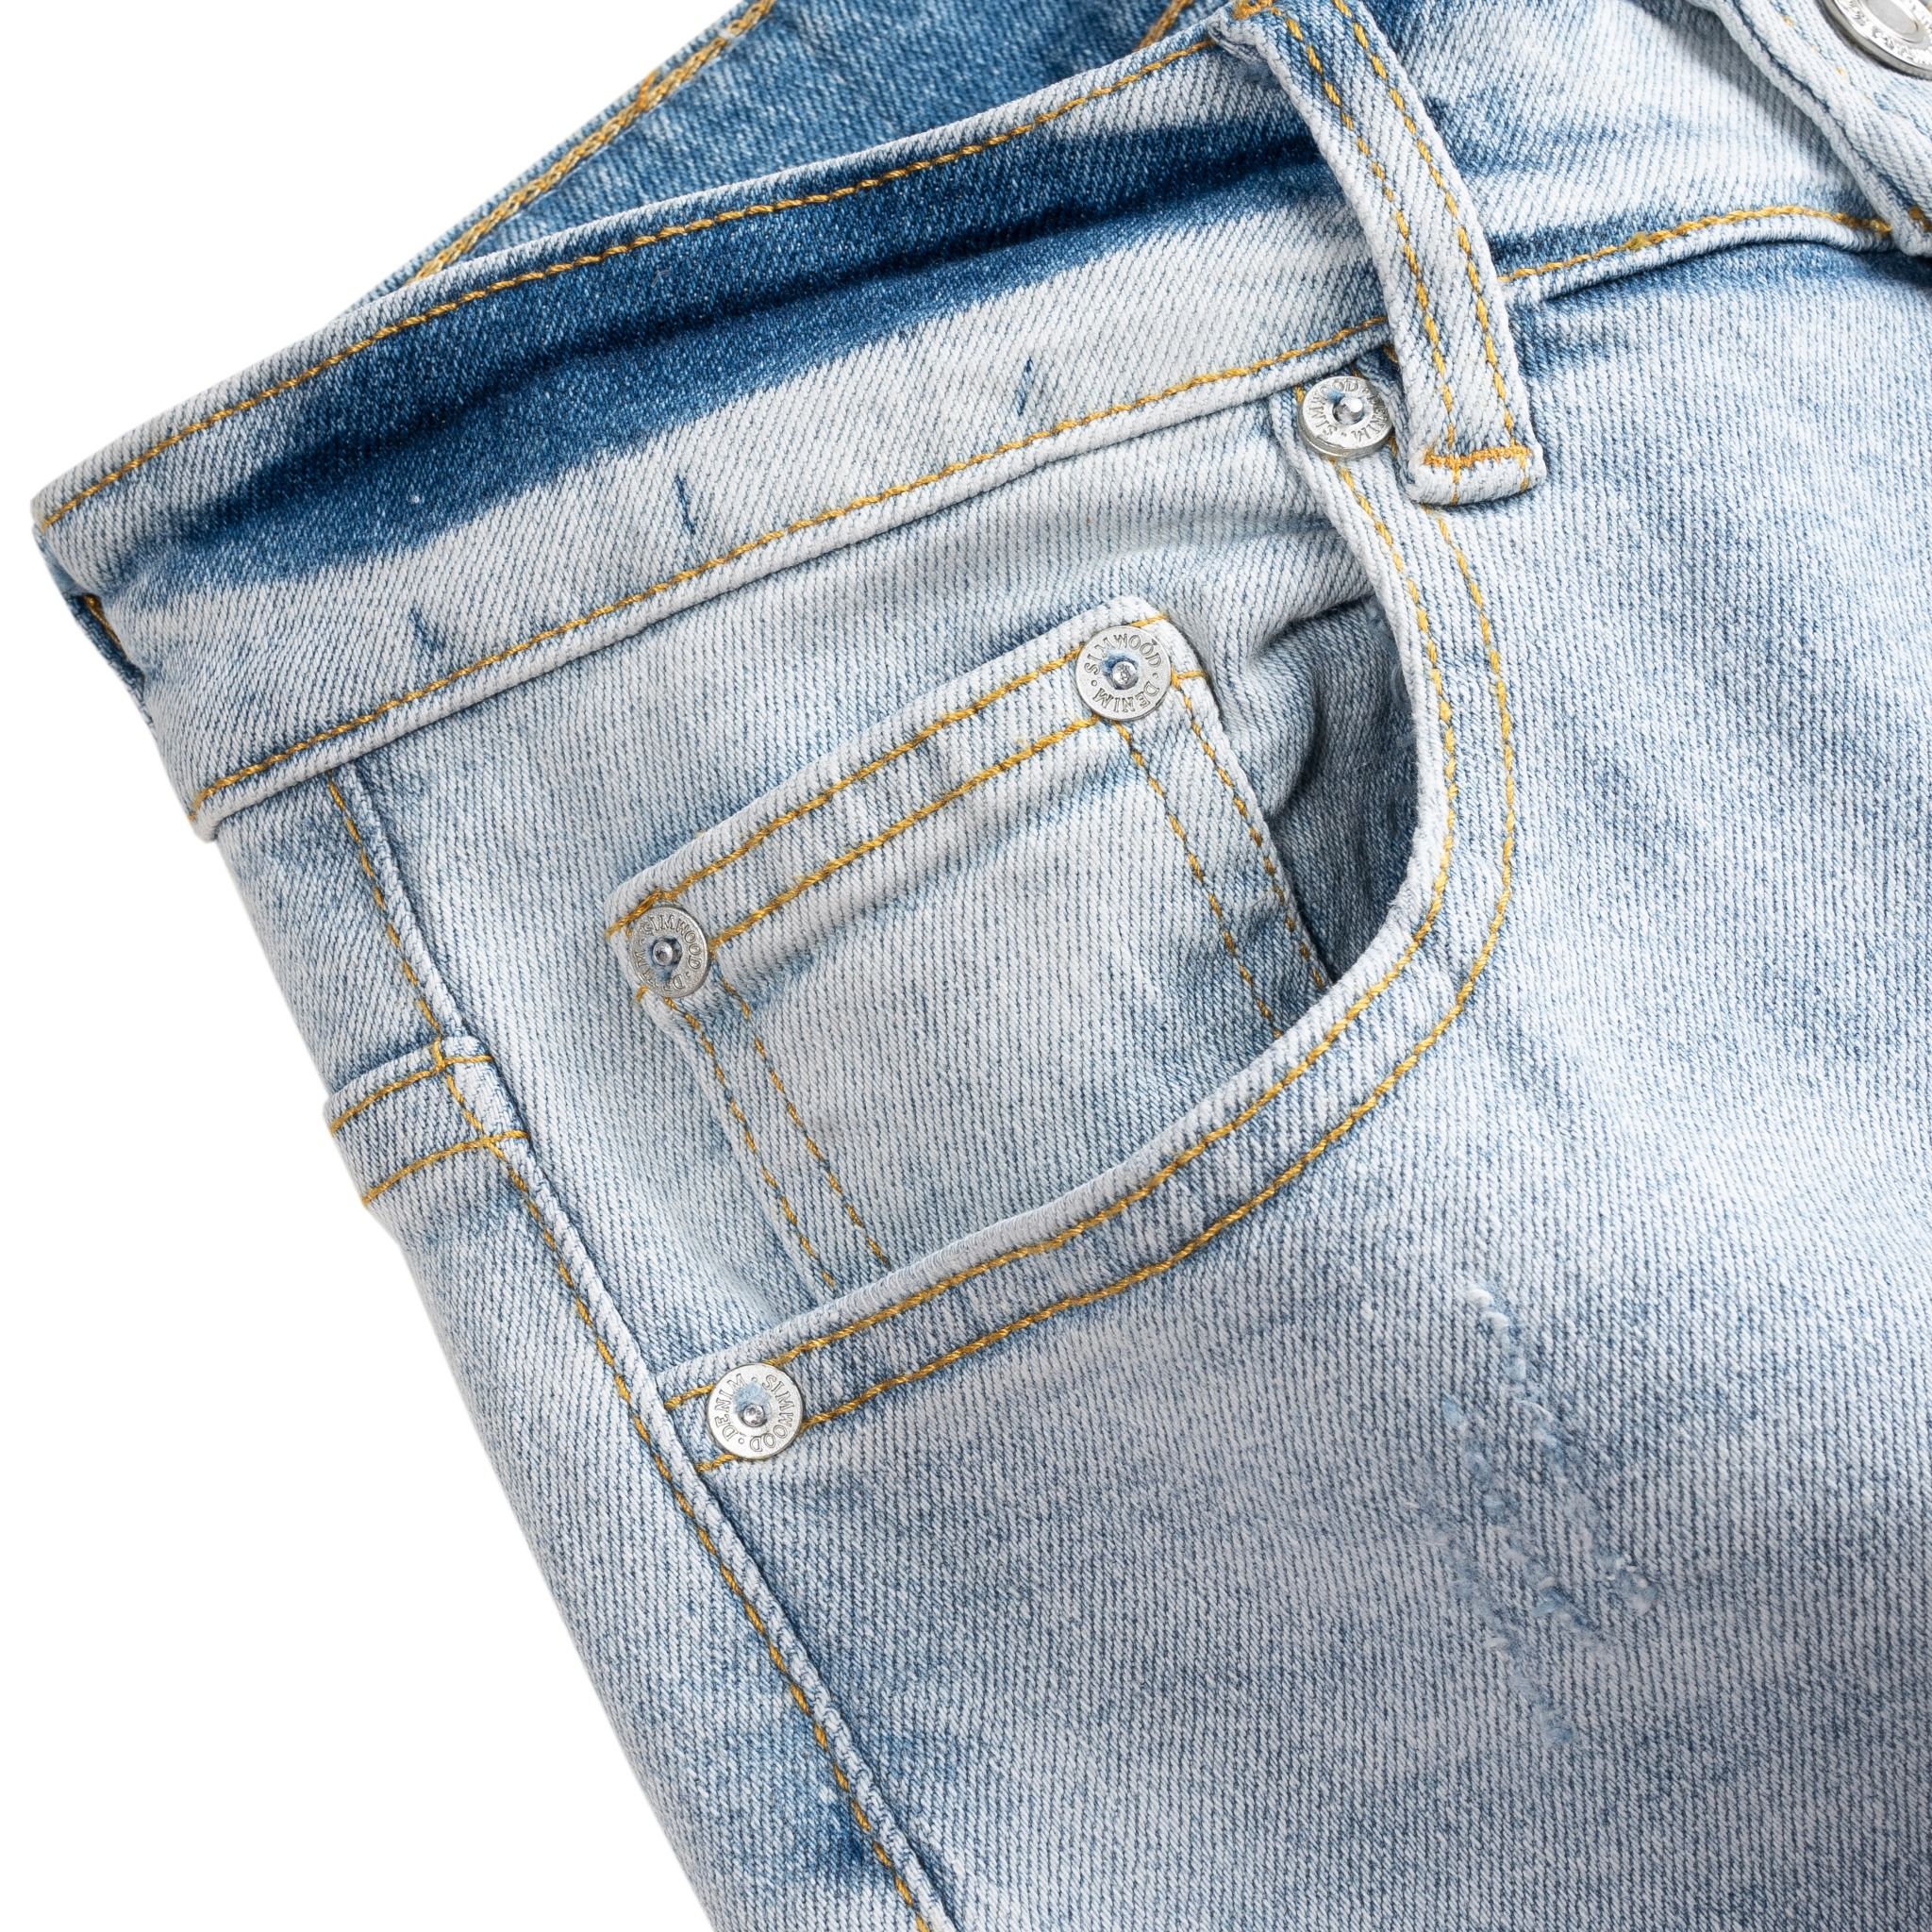  Quần Jeans Light Blue Wash Ripped Slim Tapper 1662 